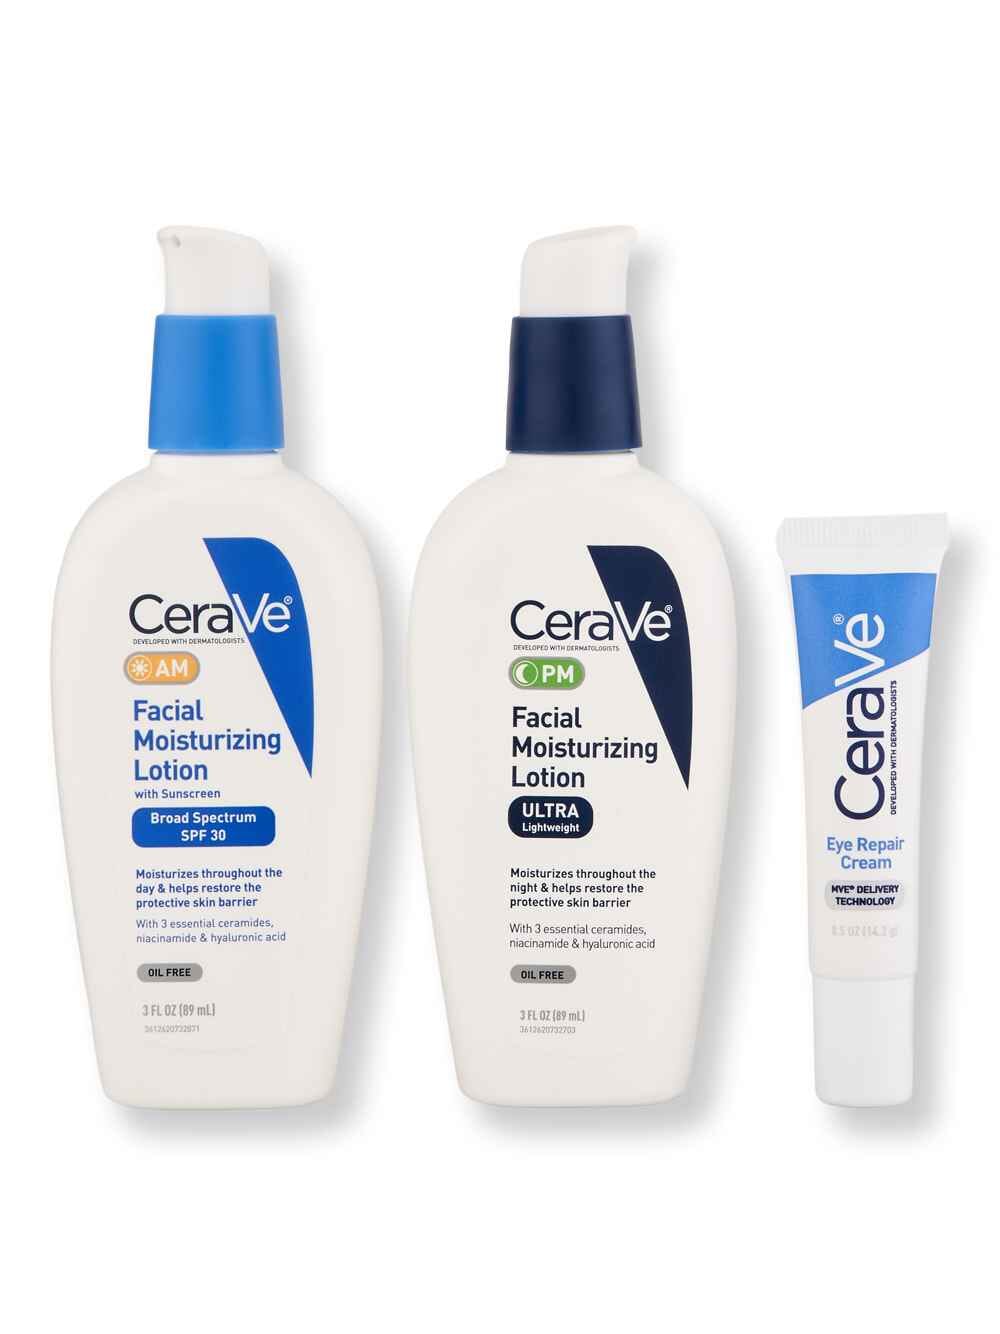 CeraVe CeraVe Facial Moisturizing Lotion AM 3oz, Facial Moisturizing Lotion PM 3oz, & Eye Repair Cream 0.5oz Skin Care Kits 